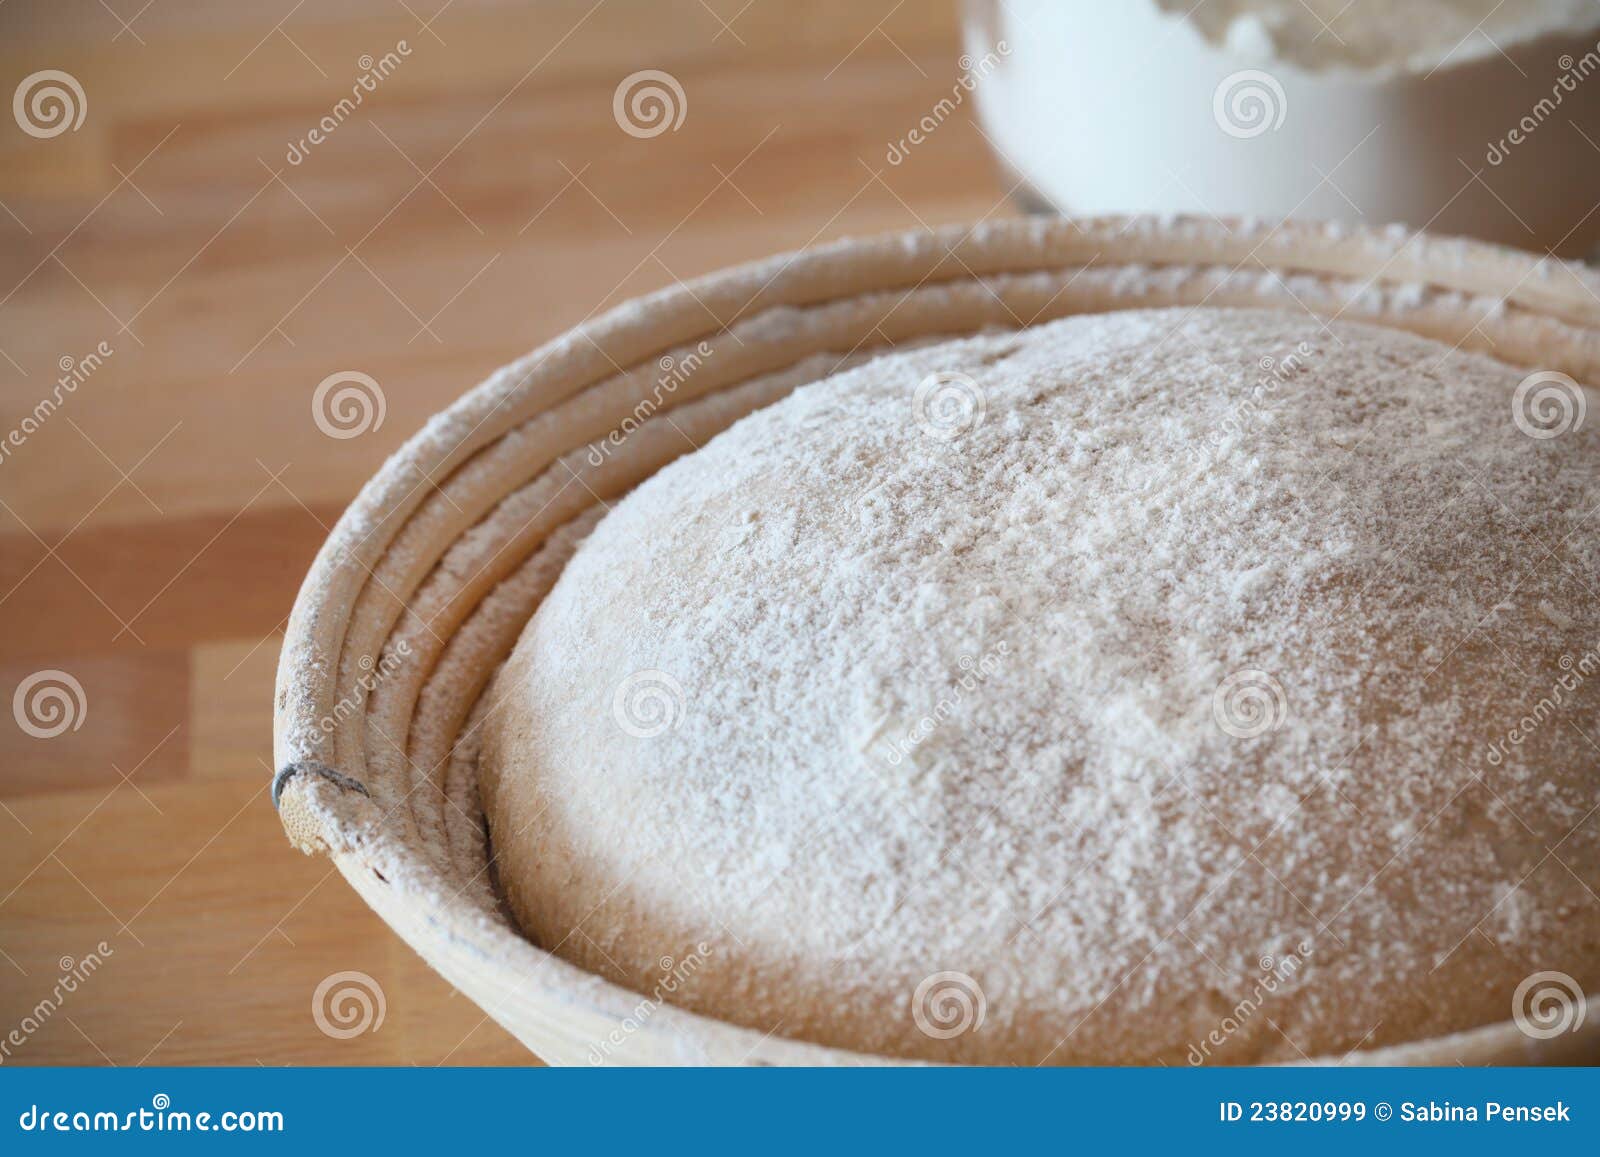 whole-grain dough proofing in a baneton basket